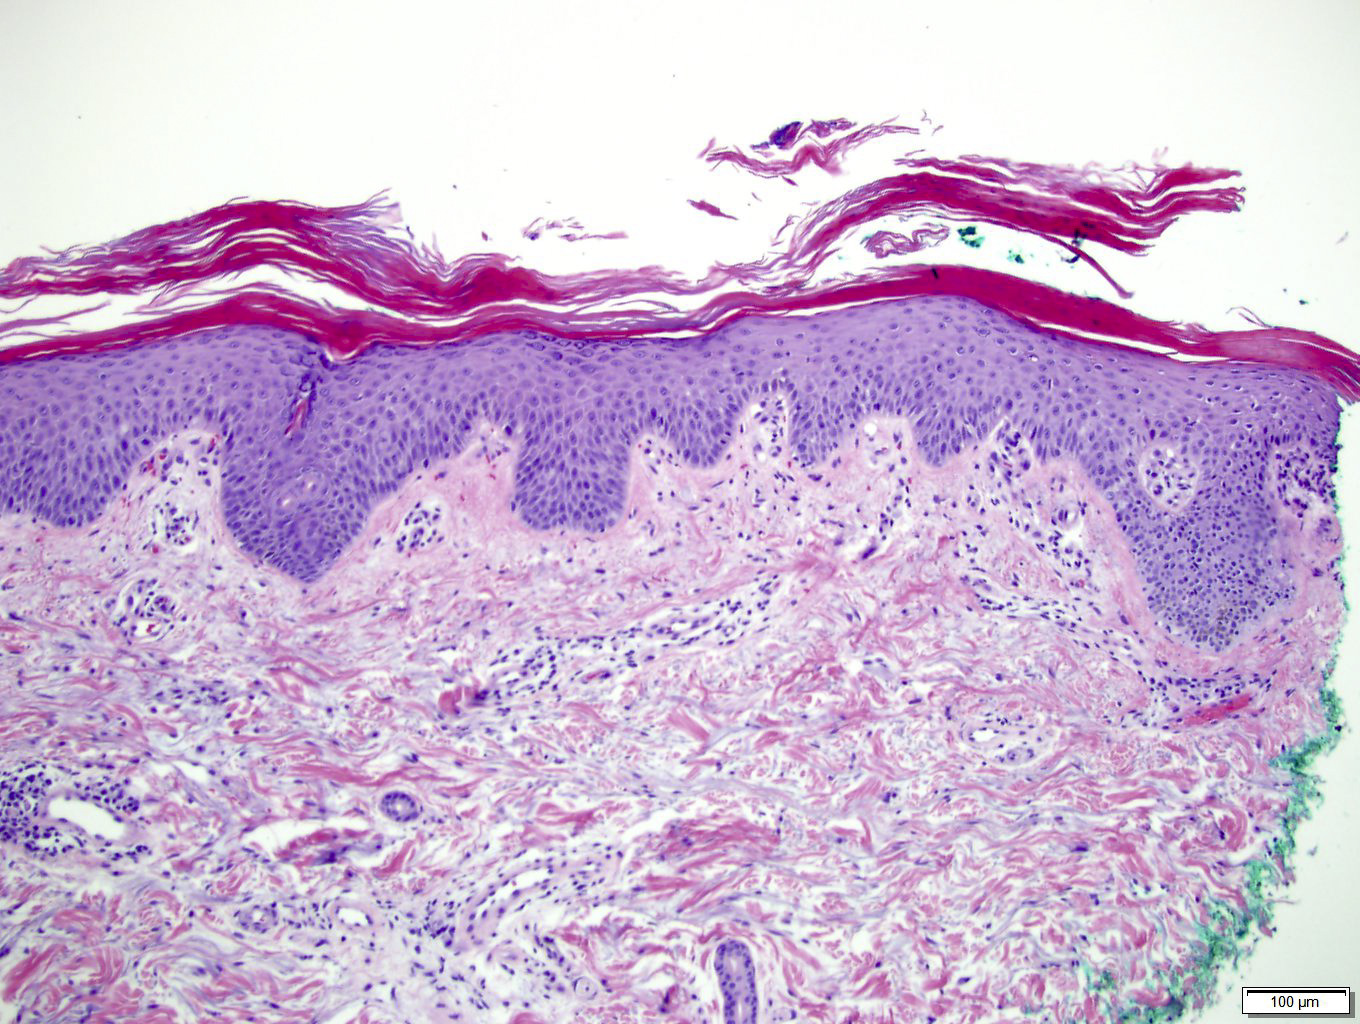 Pathology Outlines - Pityriasis rubra pilaris